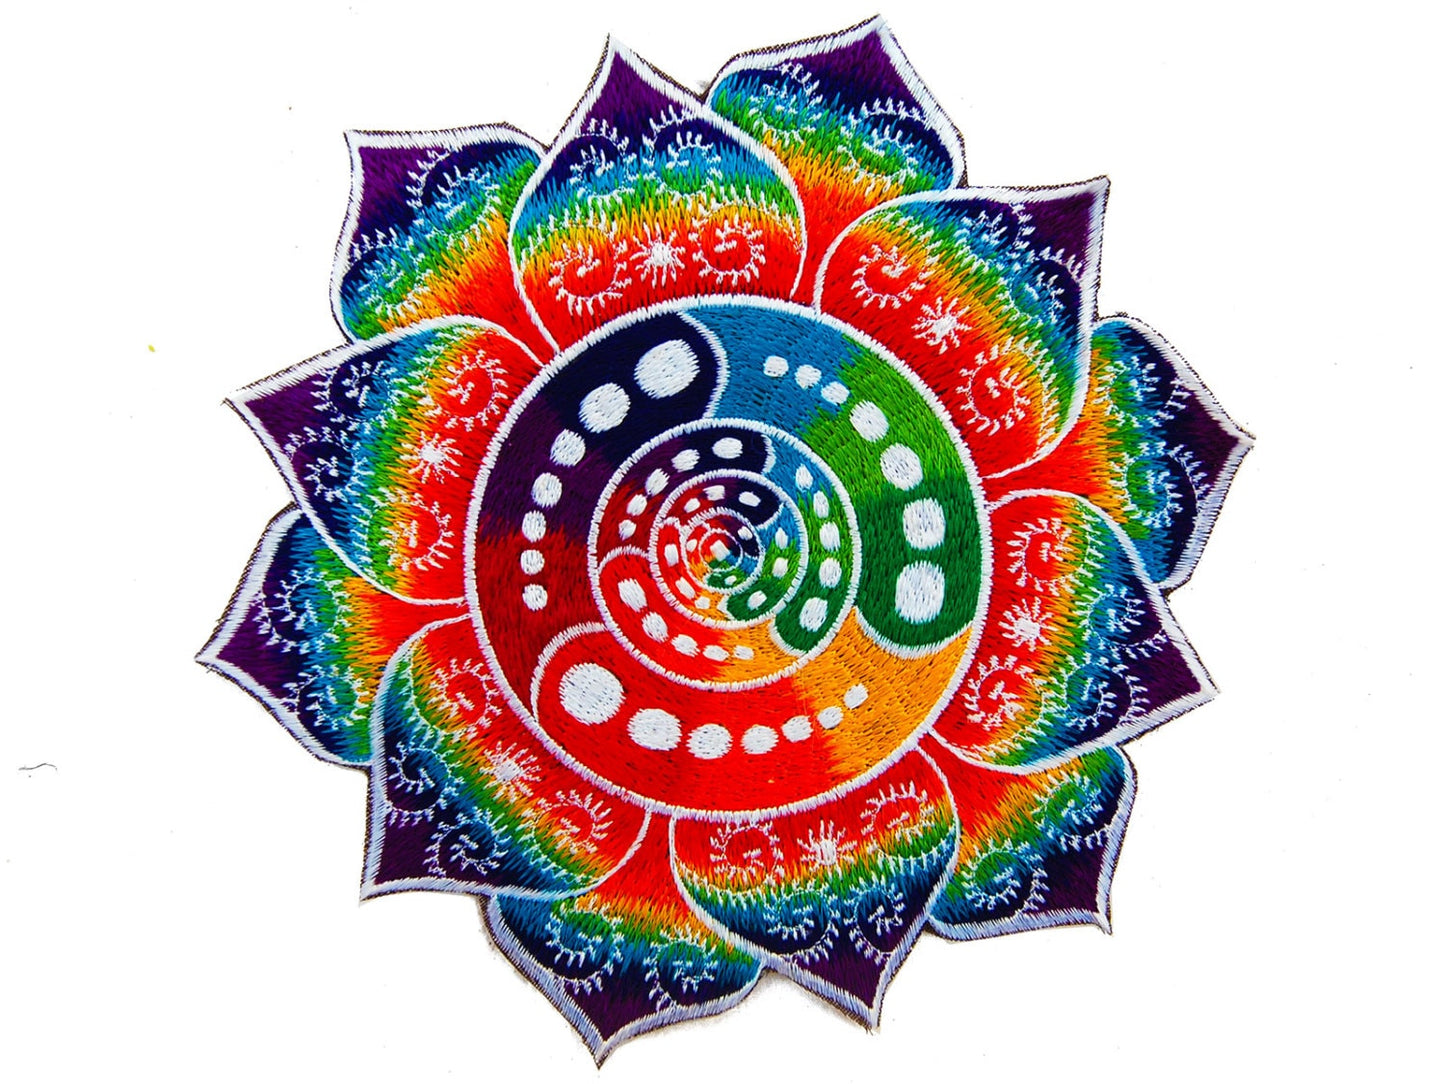 Attributes crop circle rainbow fractal art patch